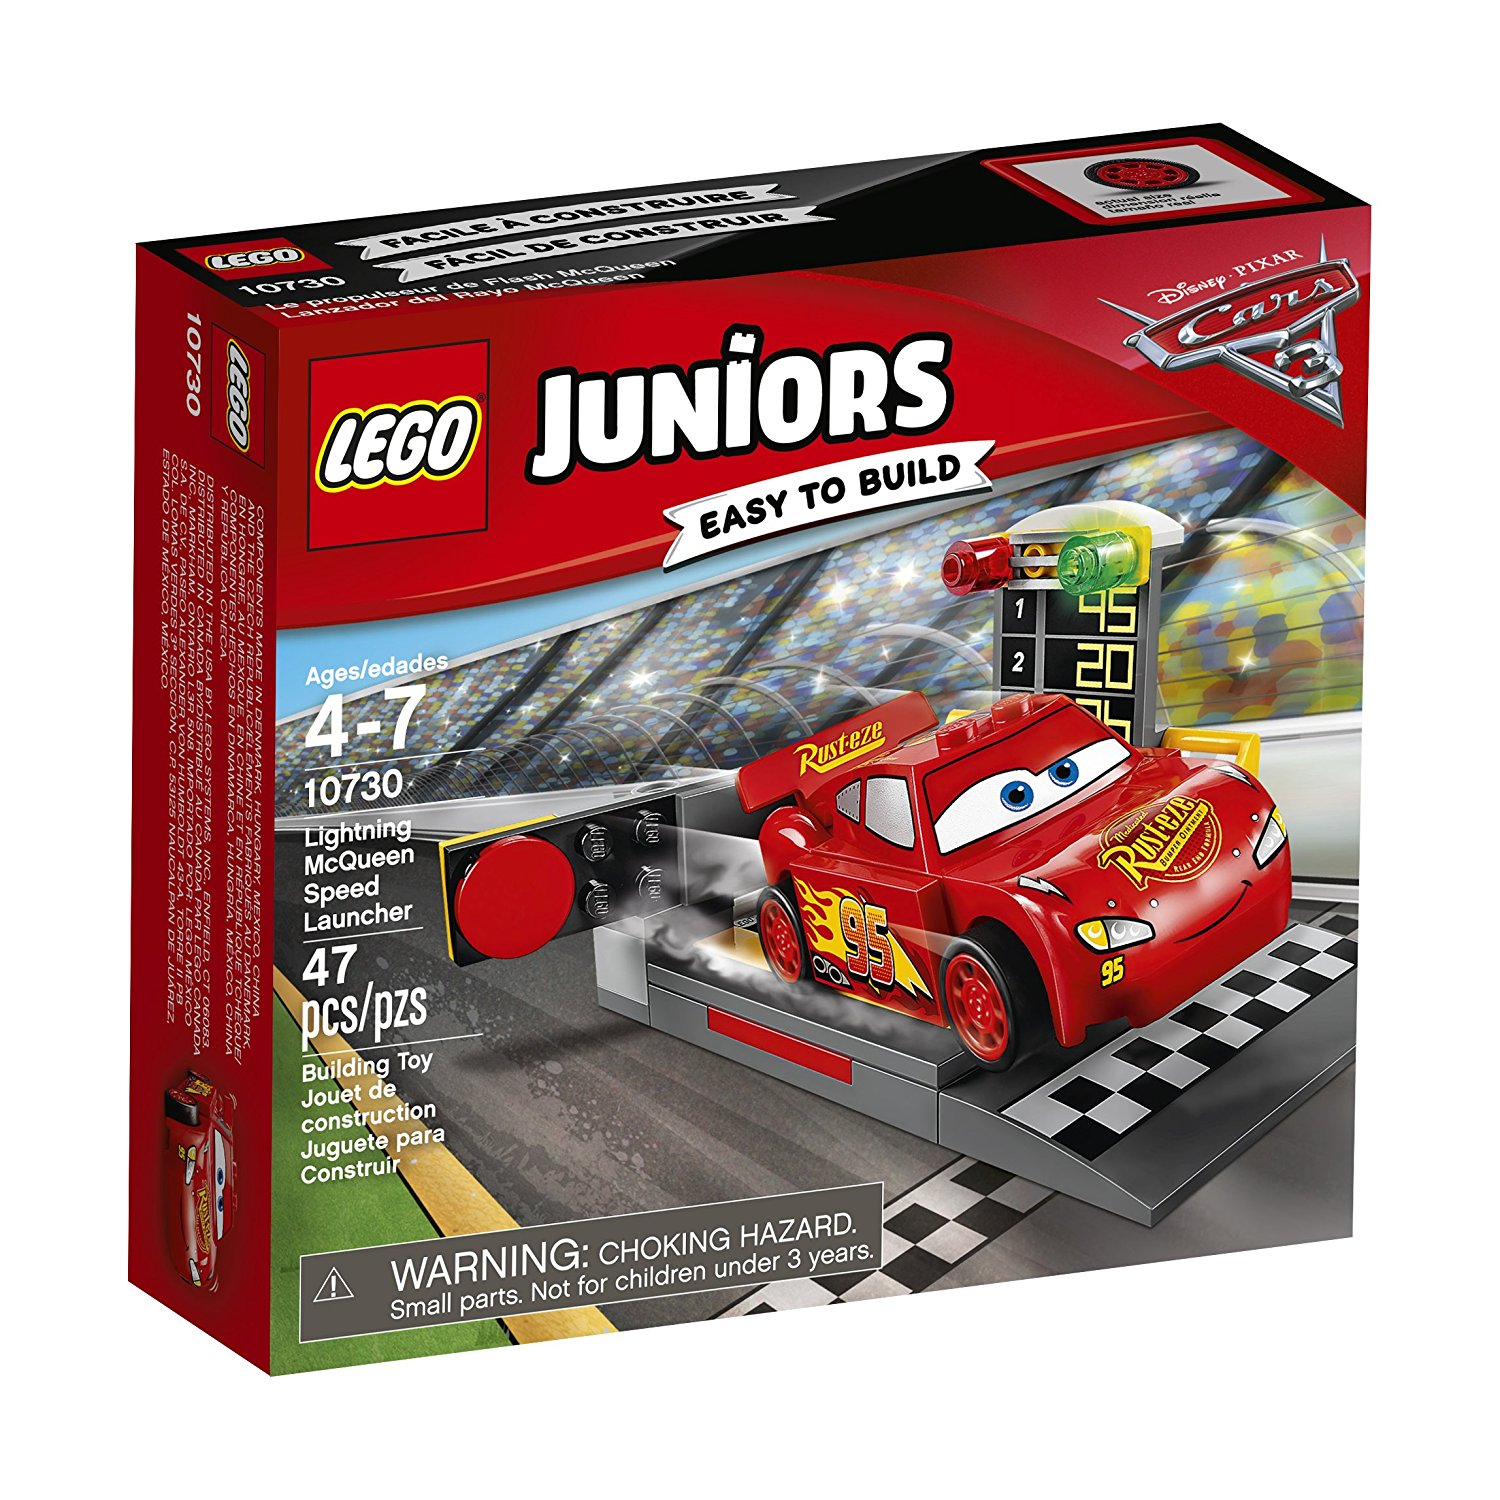 LEGO Juniors Lightning McQueen Speed Launcher Building Kit ONLY $7.99!